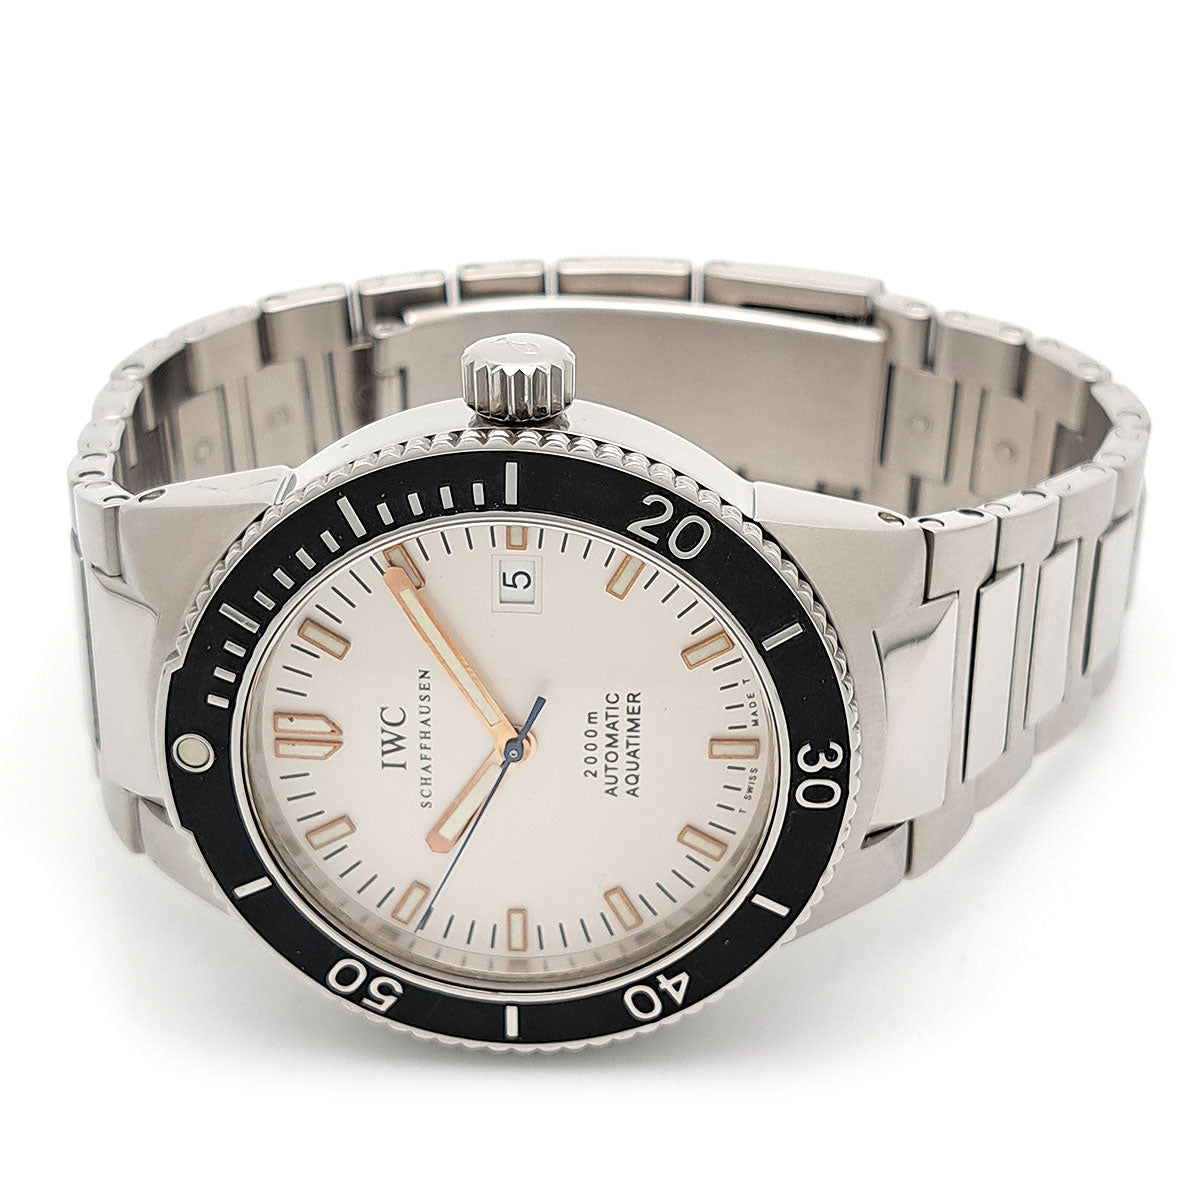 IWC GST Aquatimer Stainless Steel Men's Watch, Model IW353603 IW353603